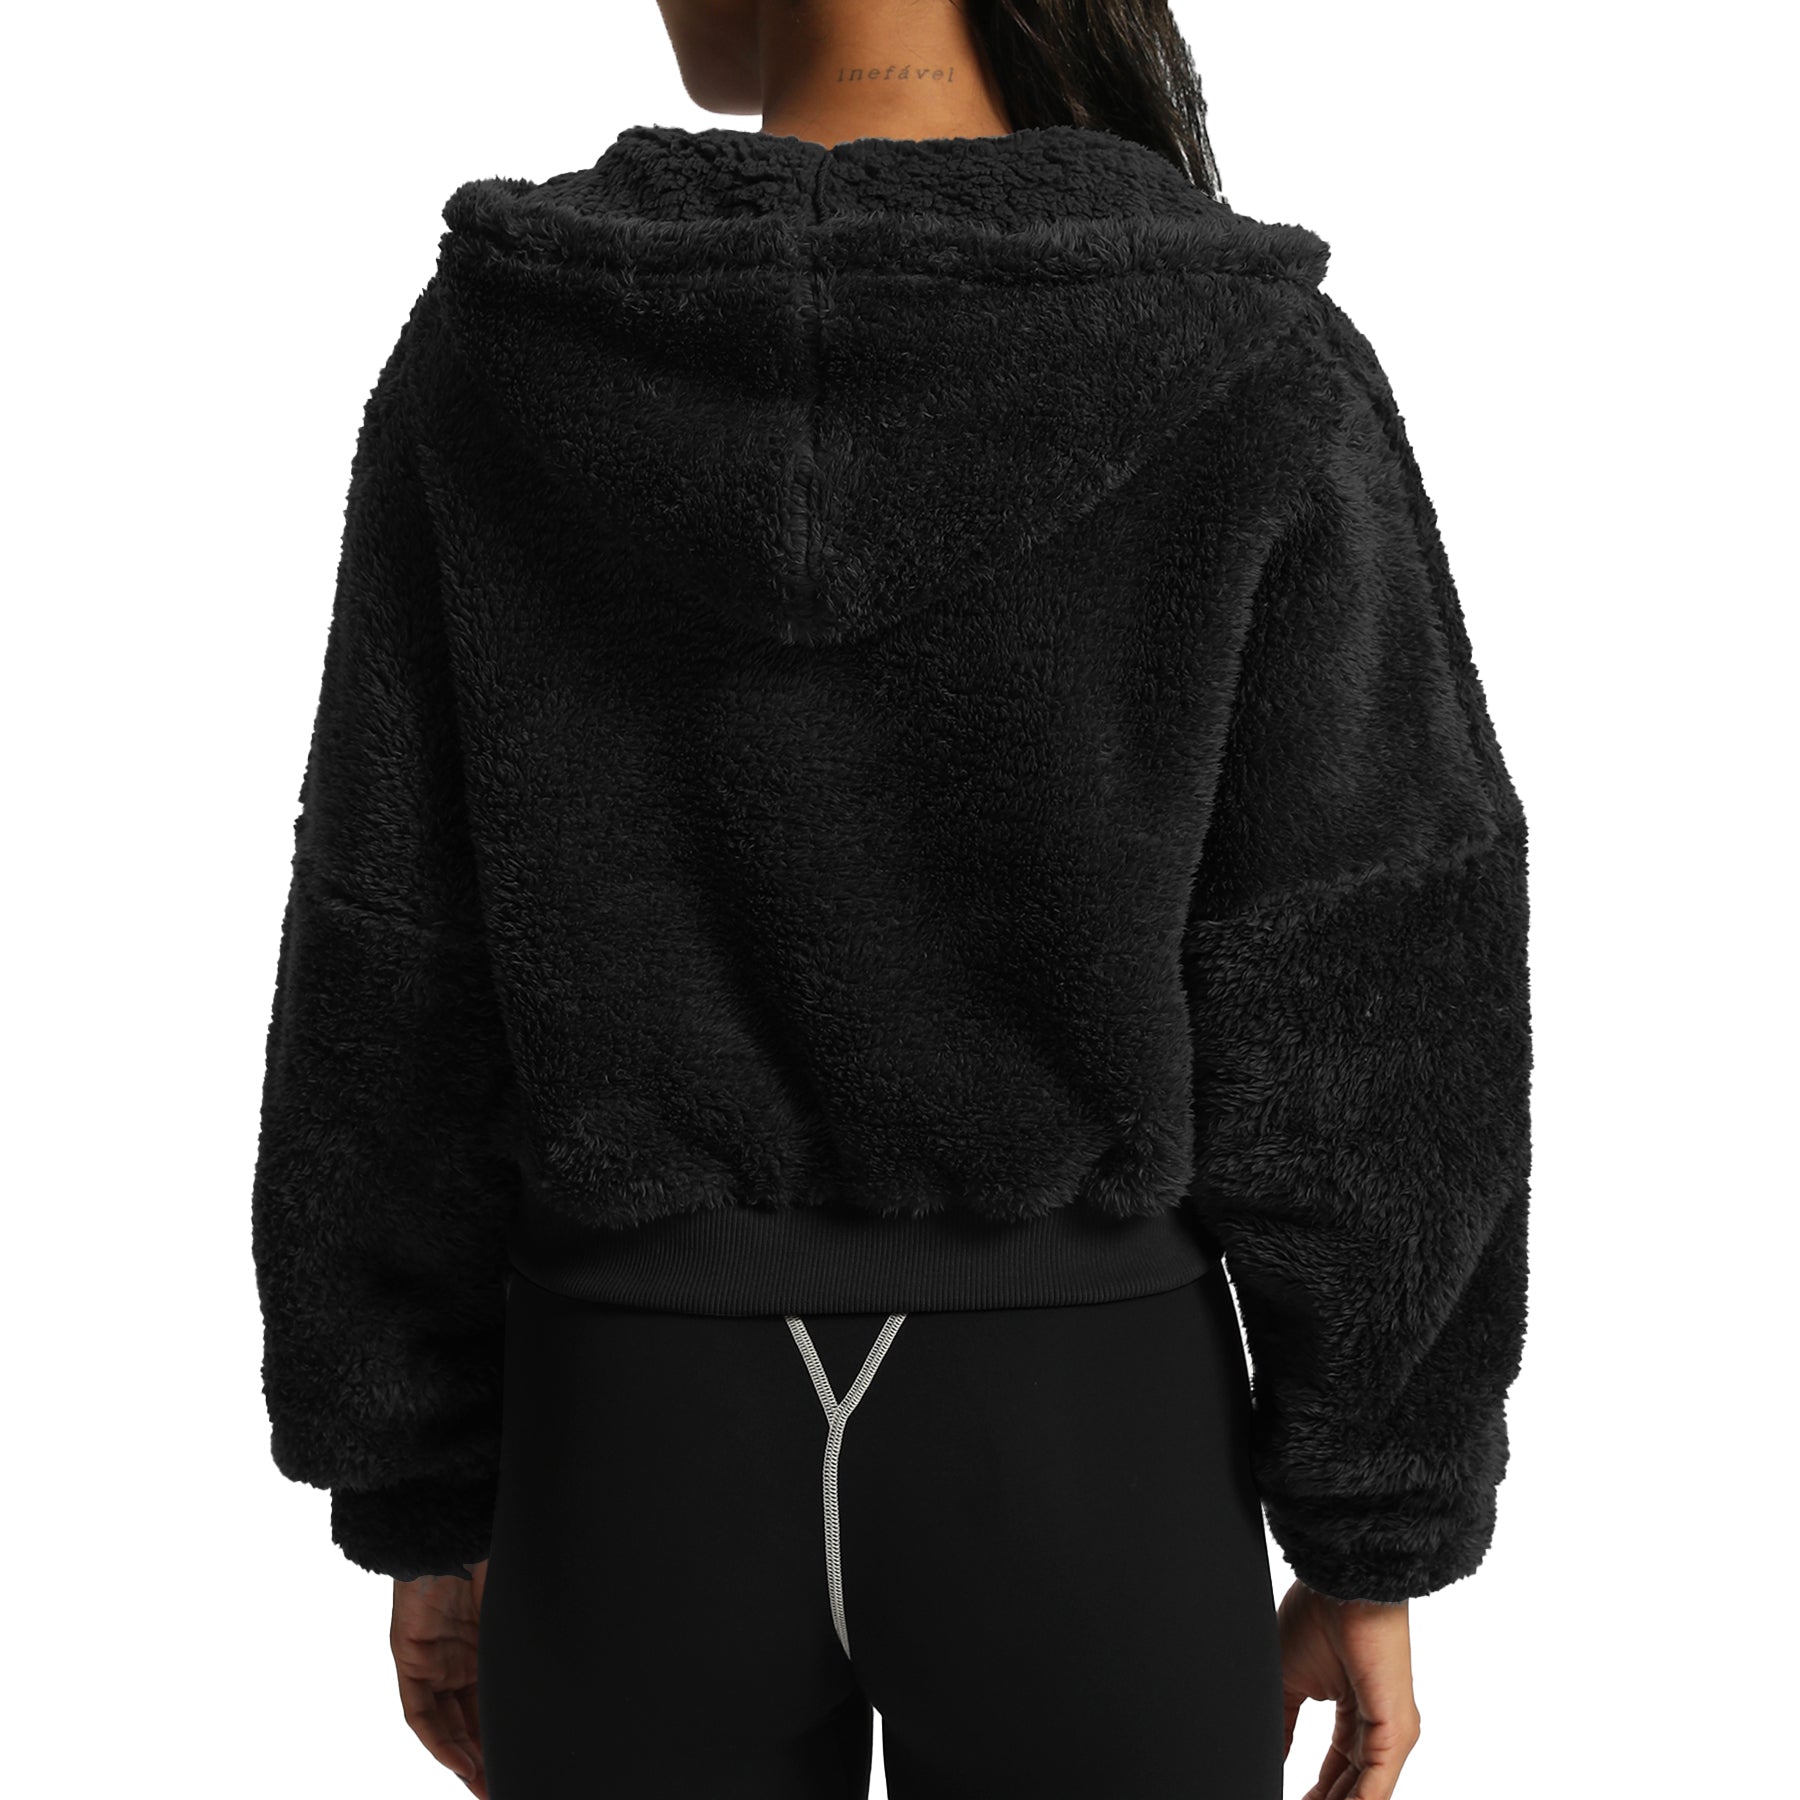 Aoxjox "Teddy" Oversized Hooded Zip Sweater